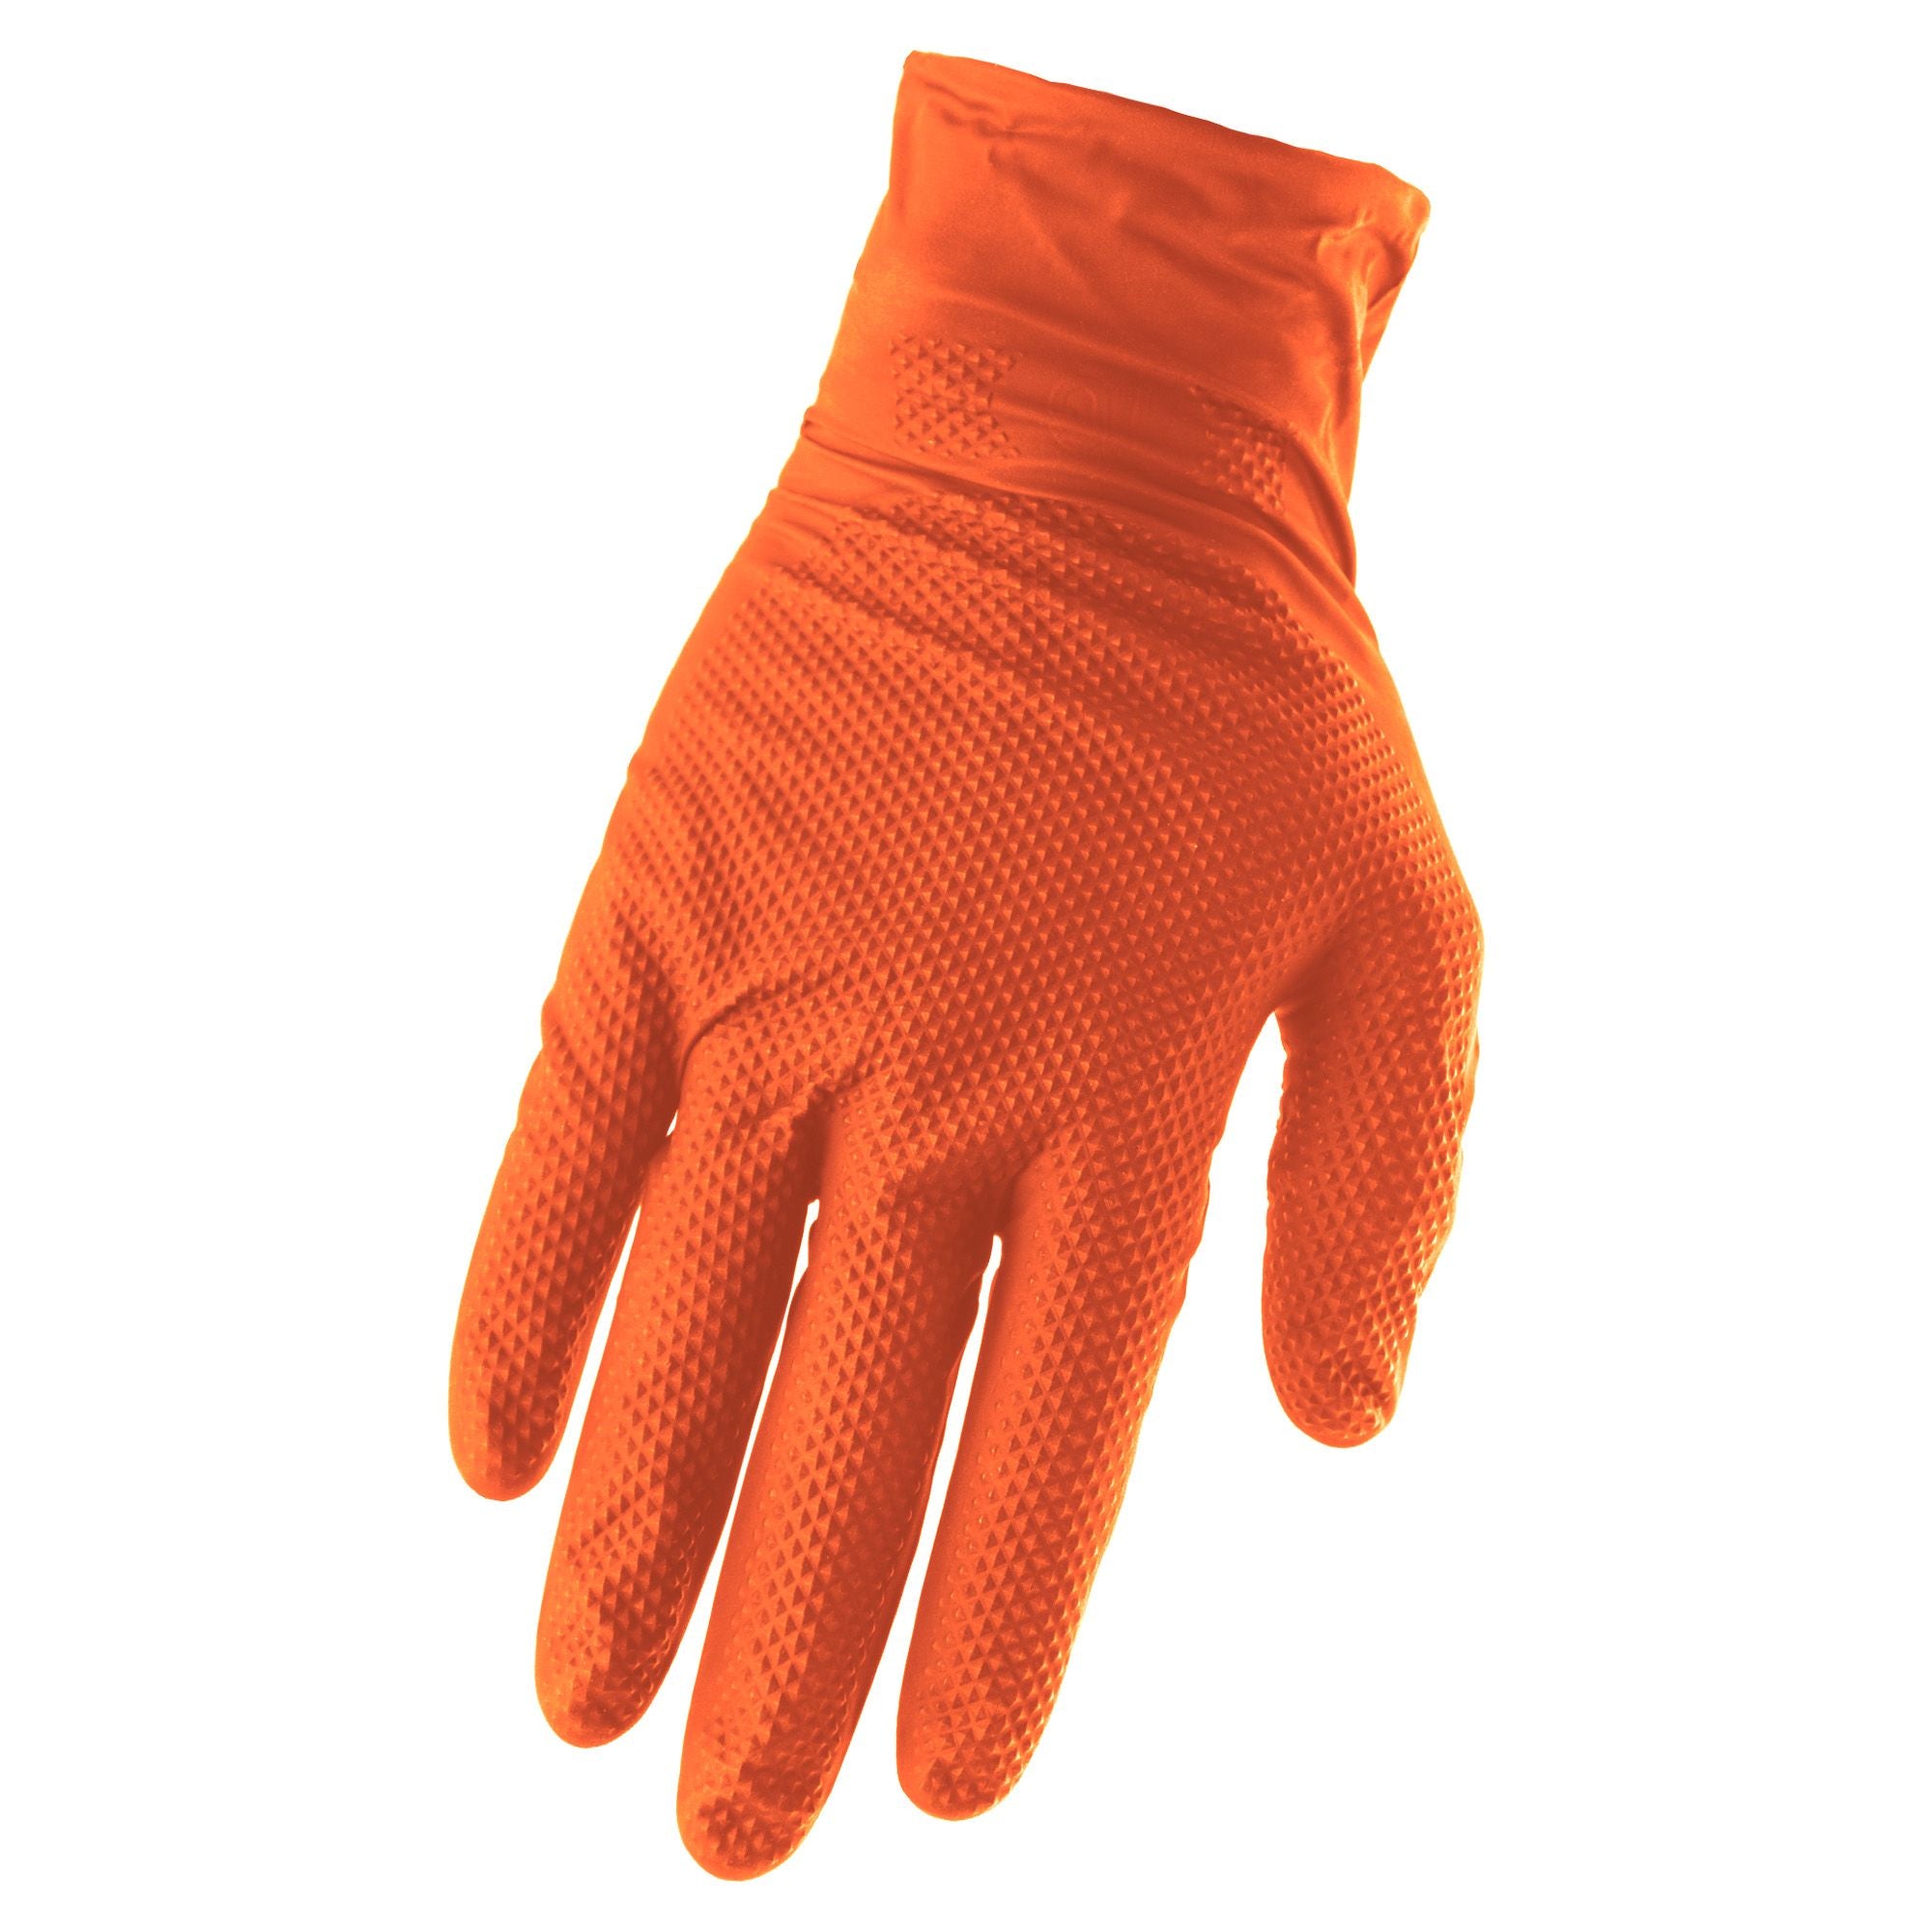 Worktuff 7-Mil Extra-Strong Orange Powder-Free Textured Disposable Nitrile Gloves